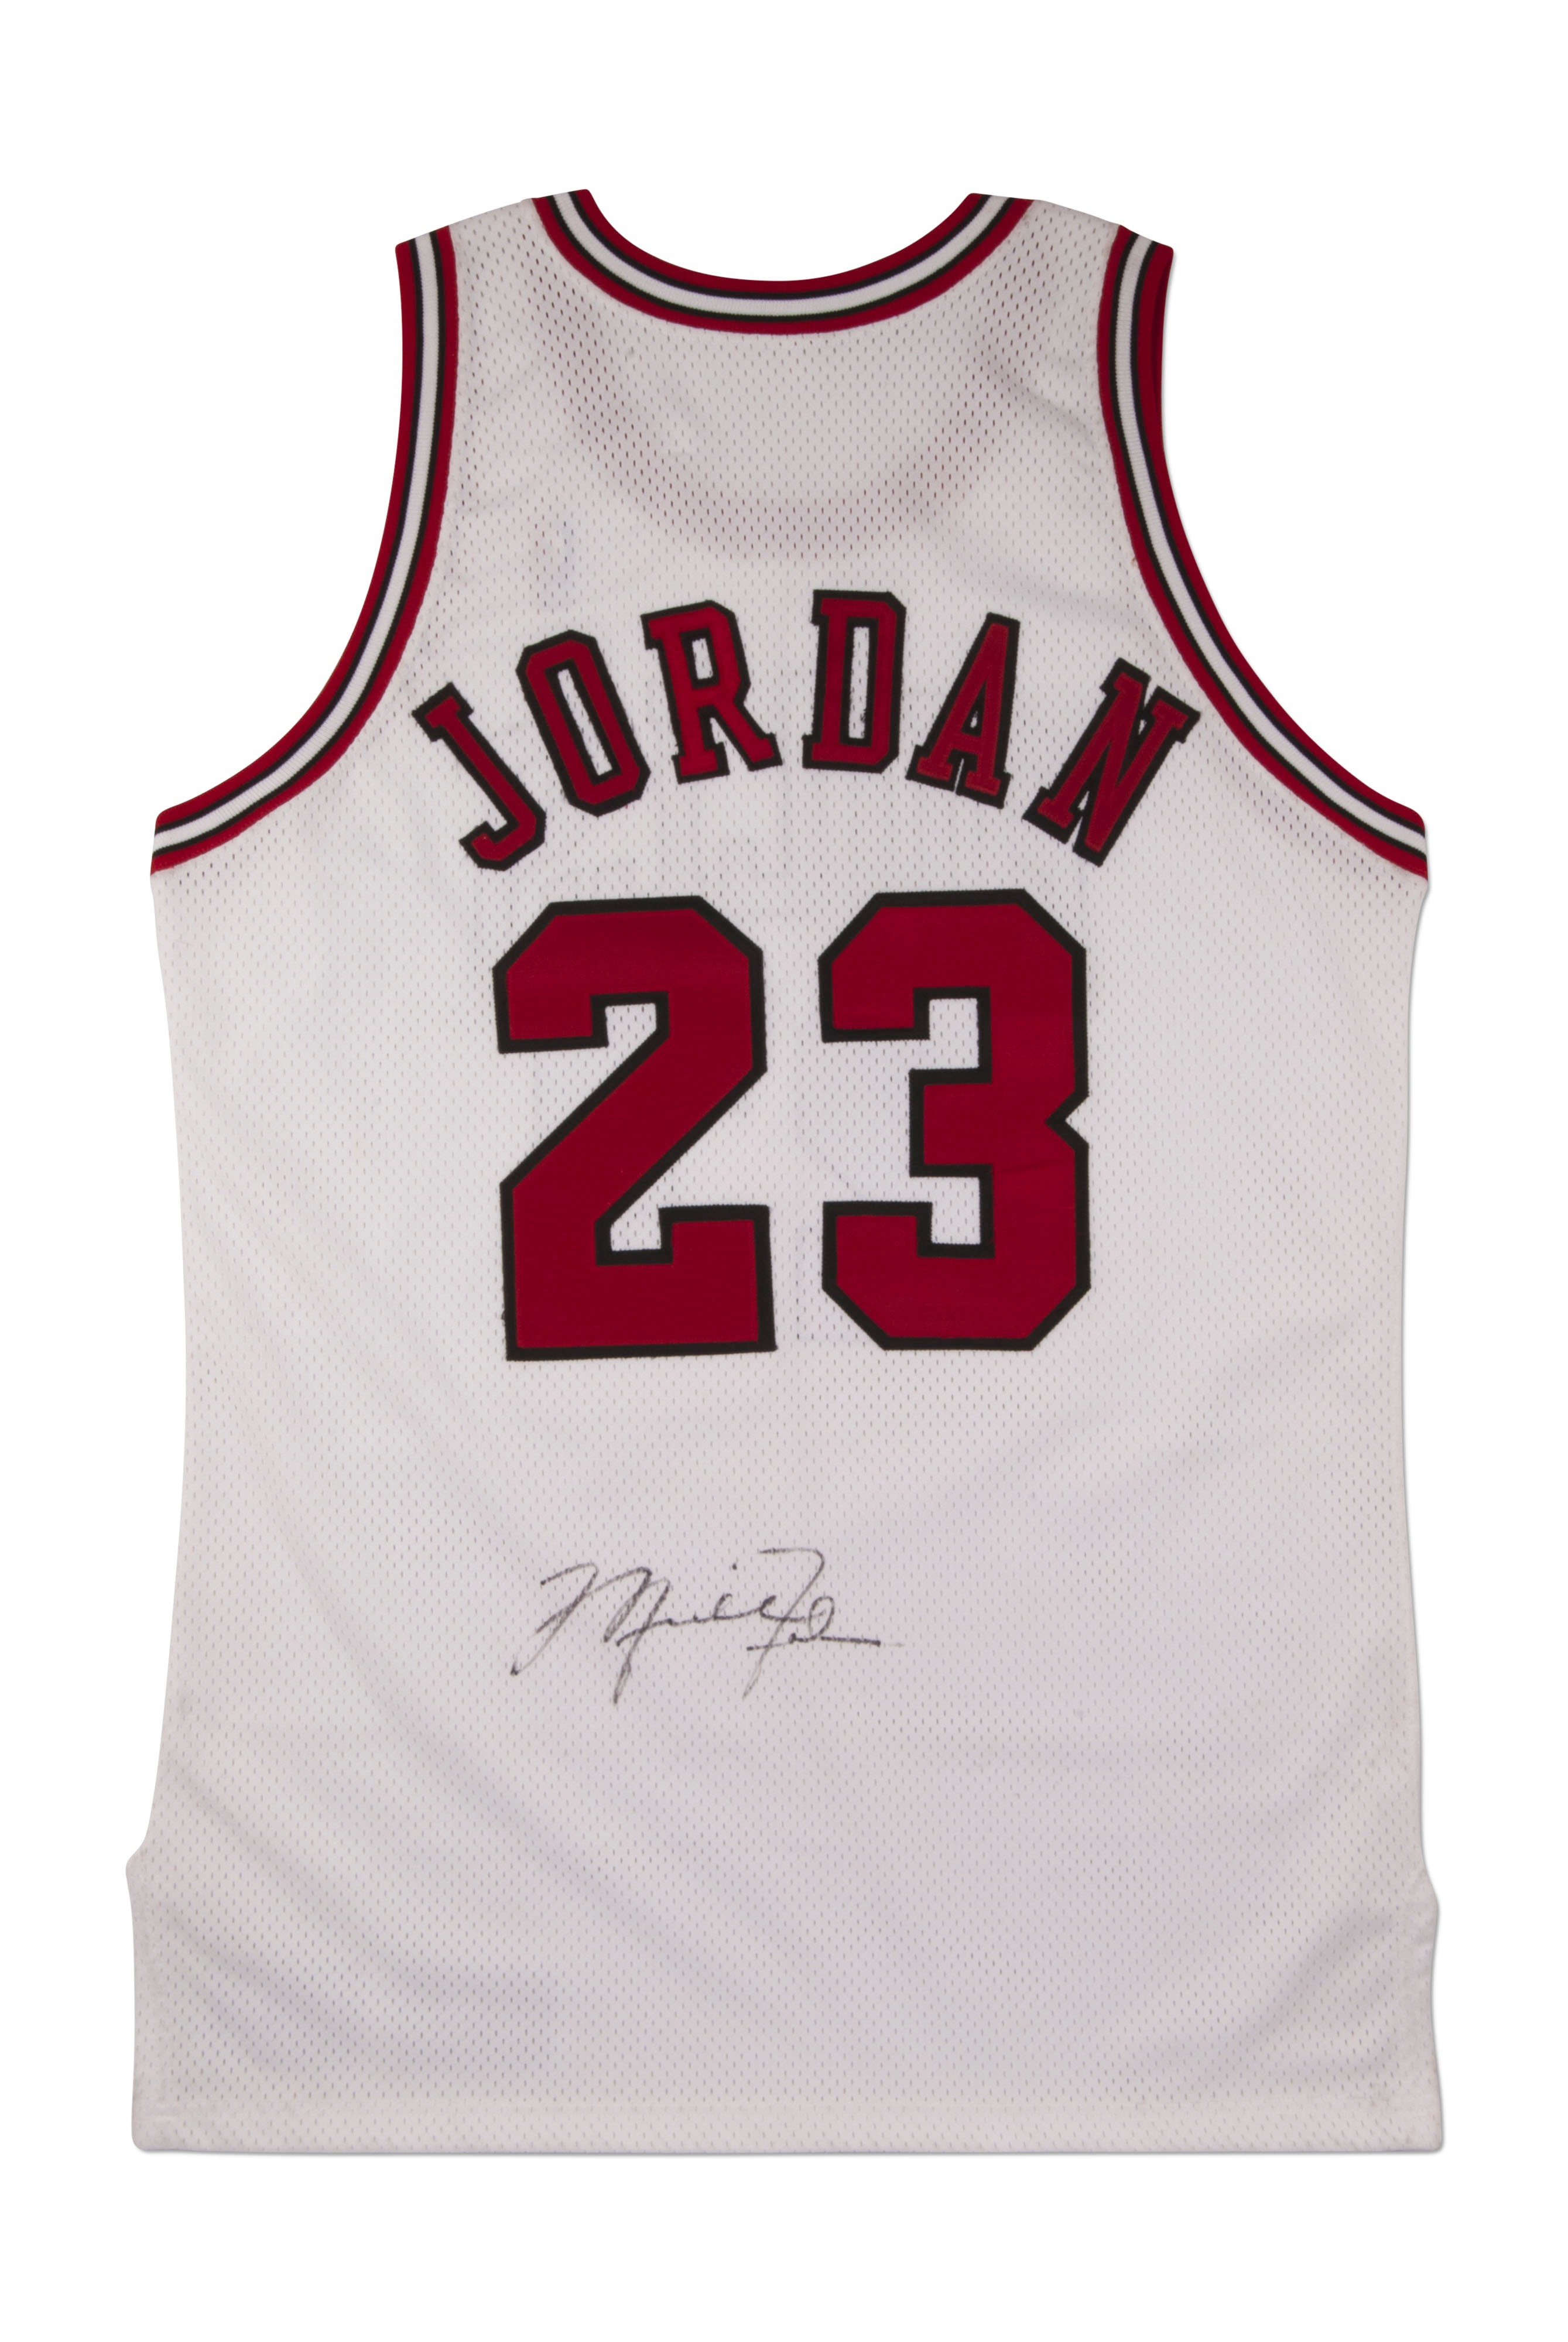 1992-93 Michael Jordan Signed Chicago Bulls Jersey. Basketball